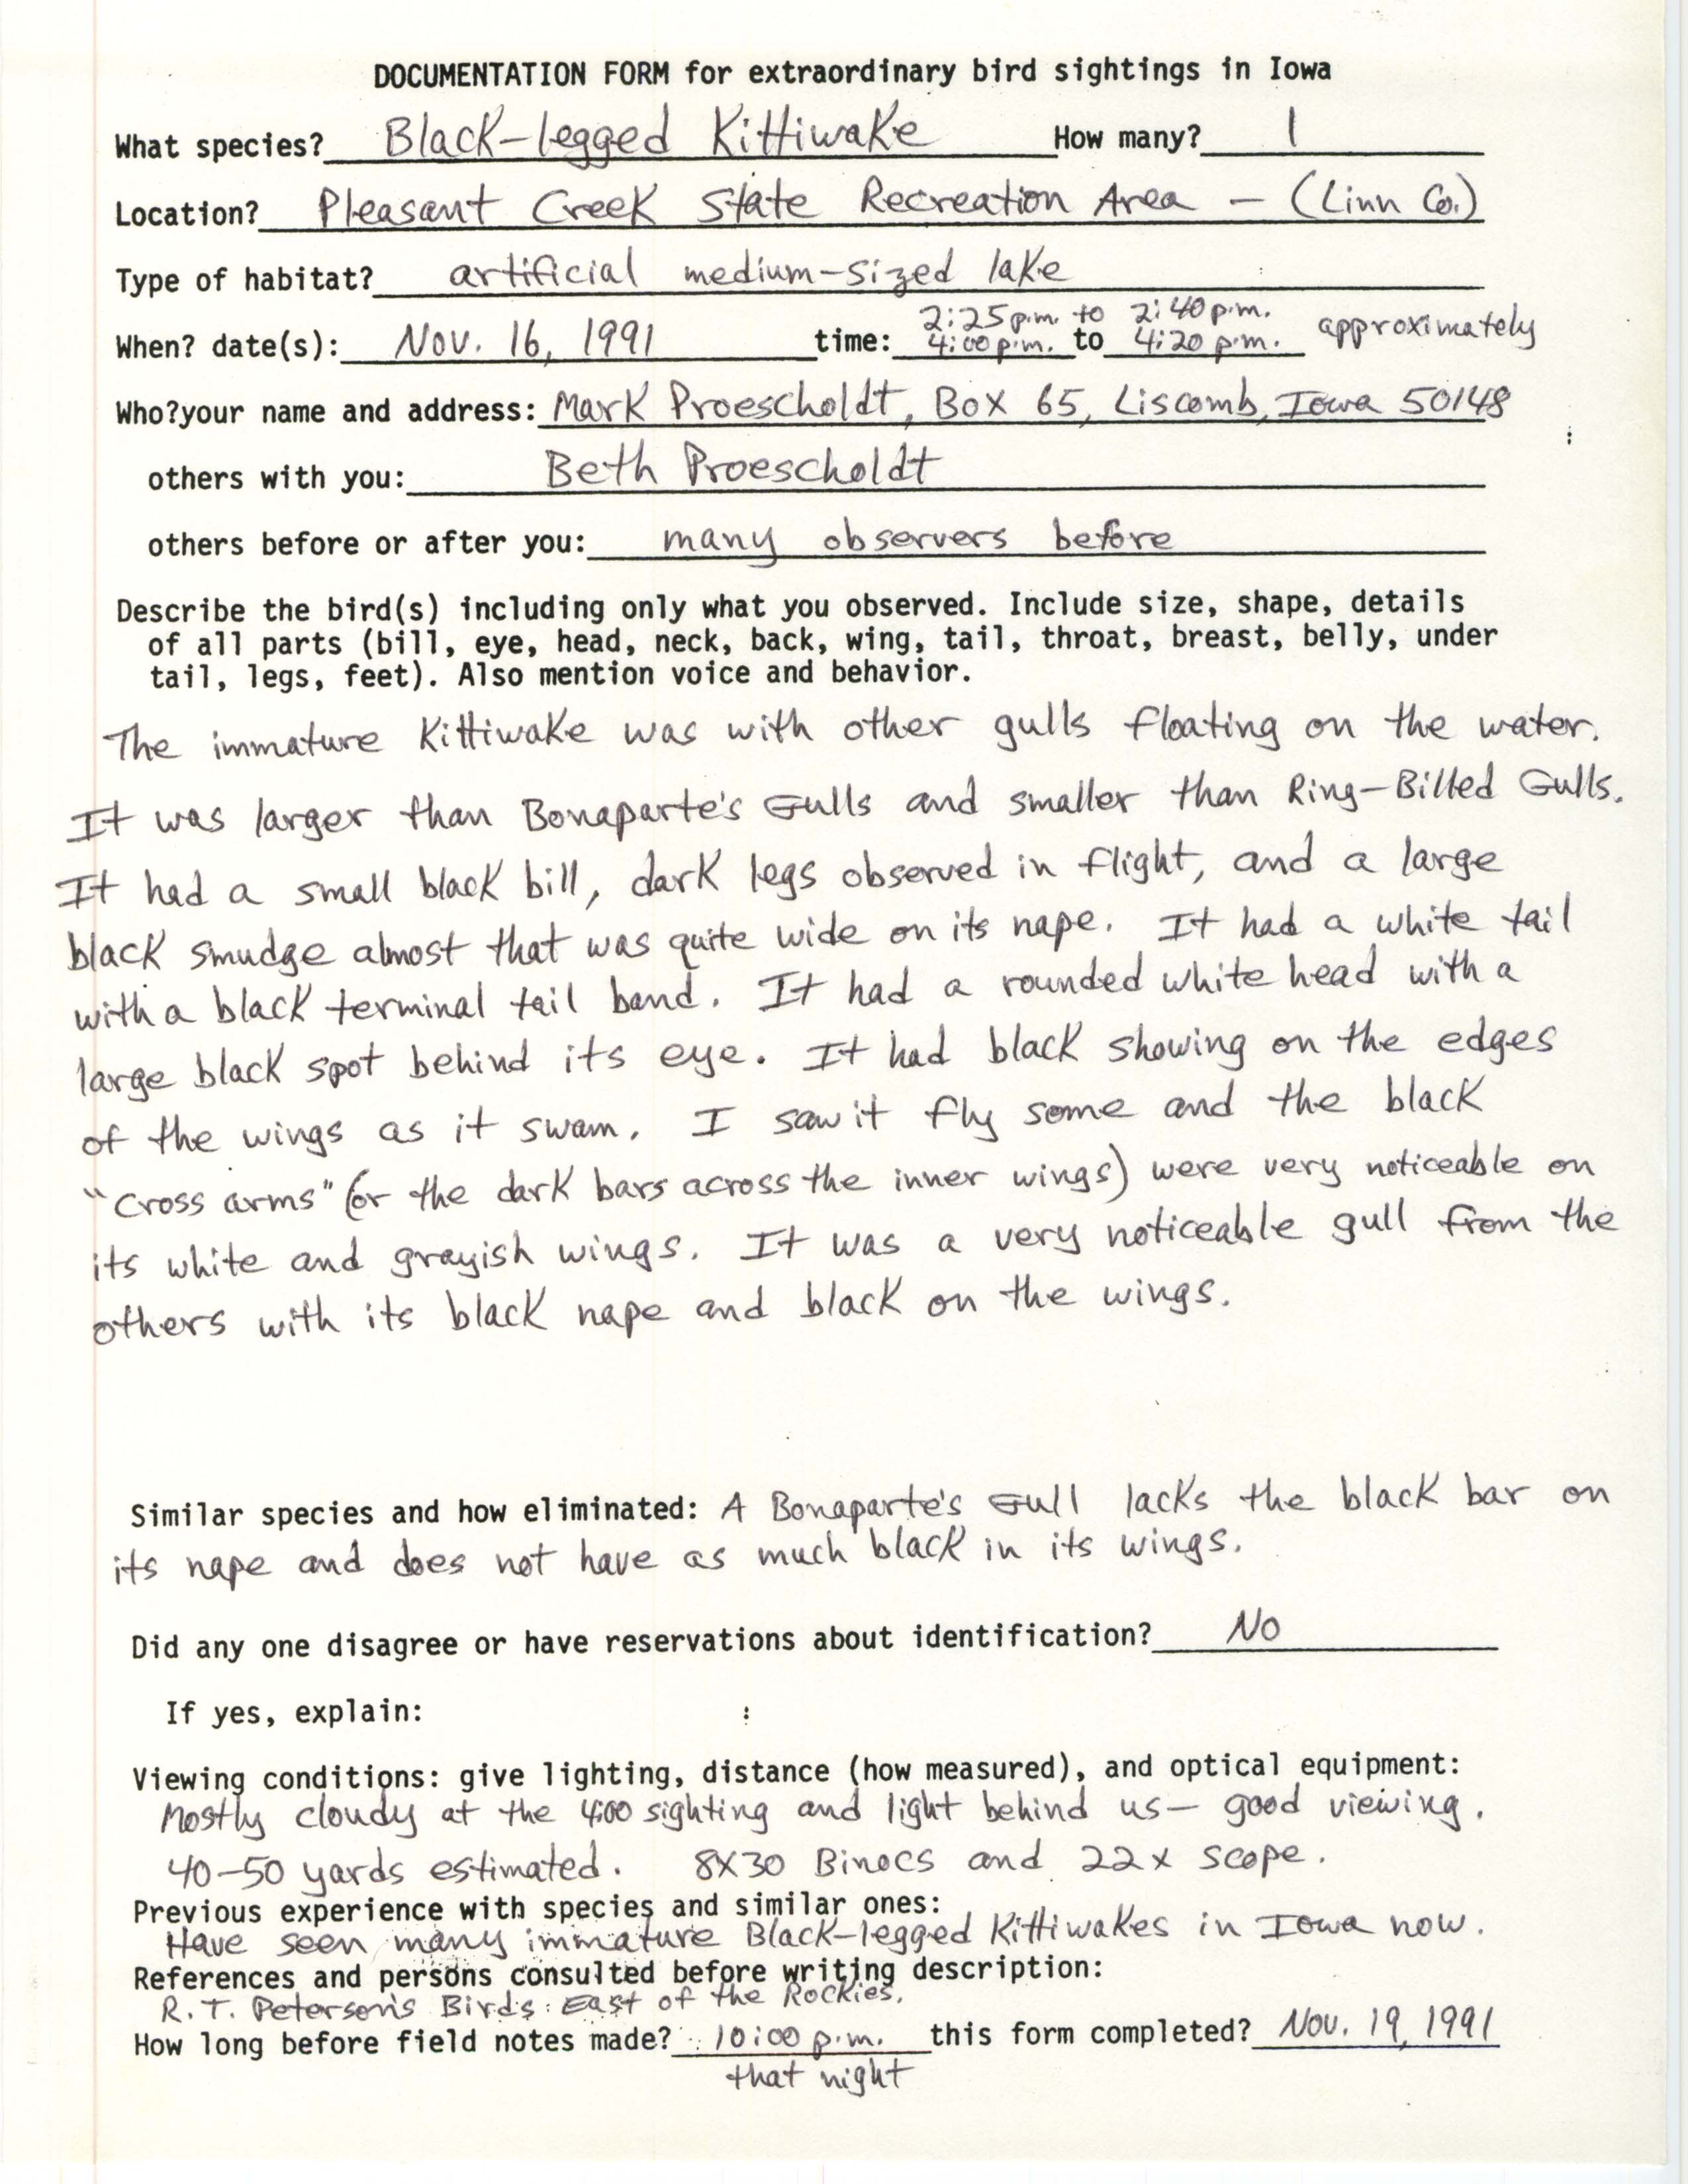 Rare bird documentation form for Black-legged Kittiwake at Pleasant Creek State Recreation Area, 1991